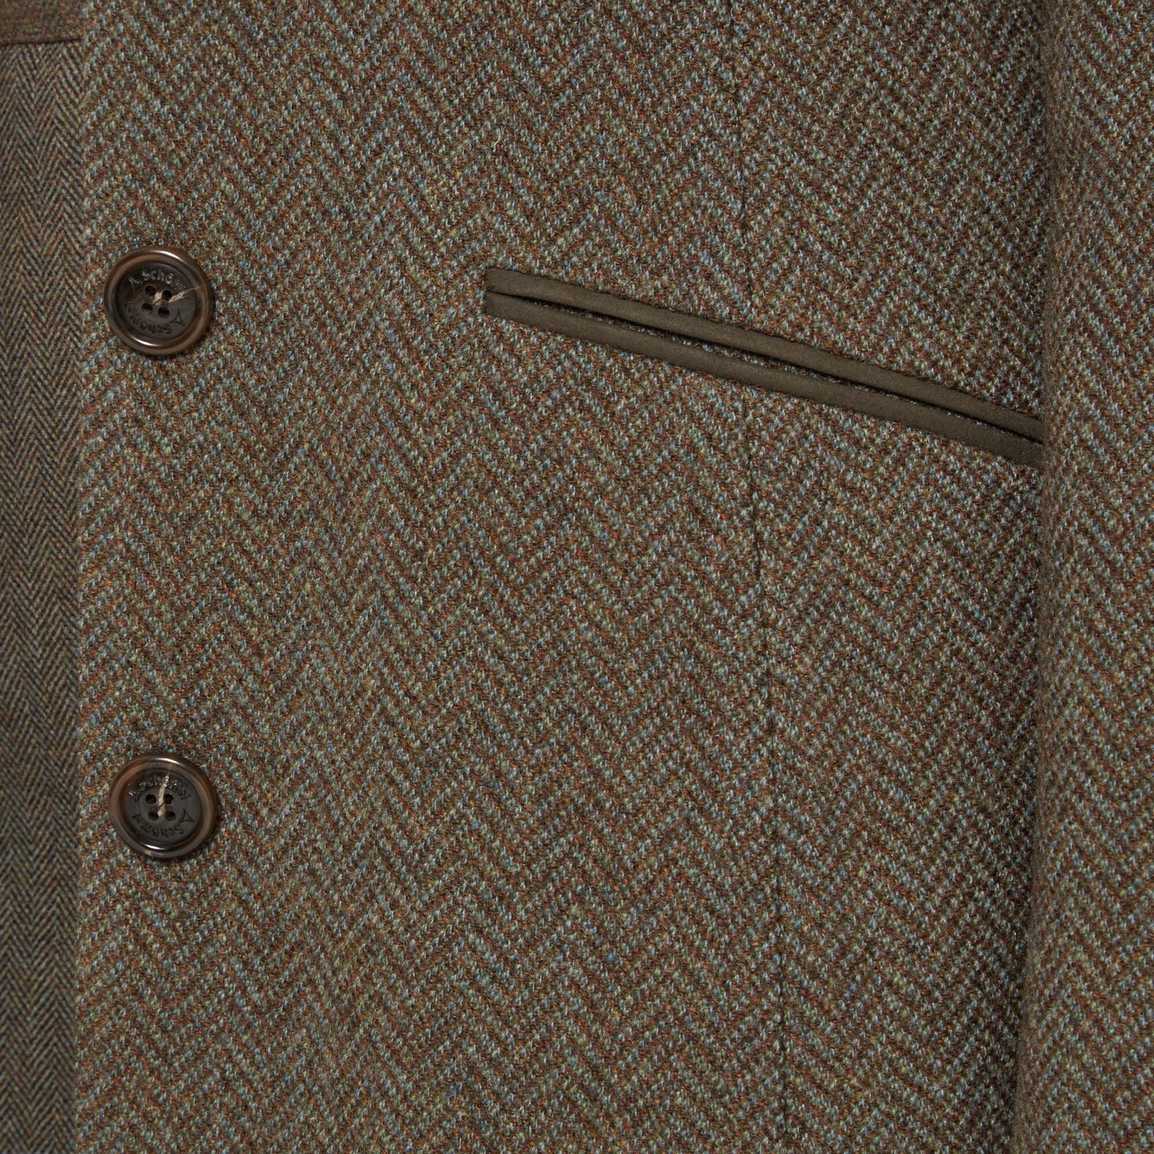 Schoffel Portree Tweed Jacket - Loden Green Herringbone Wide Tweed